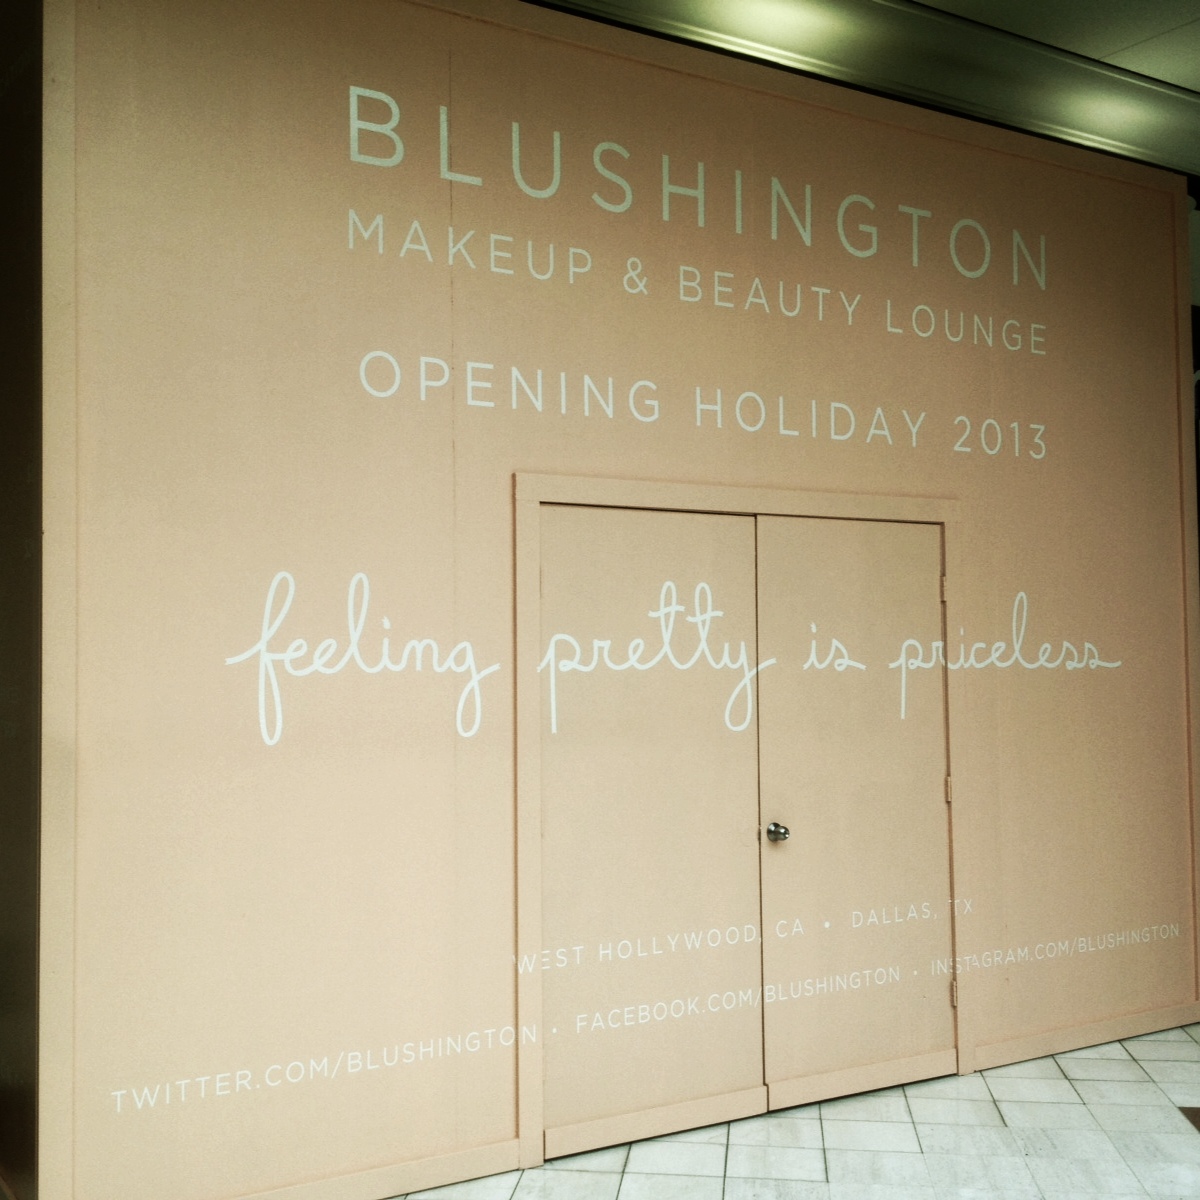 Blushington coming to Fashion Island!